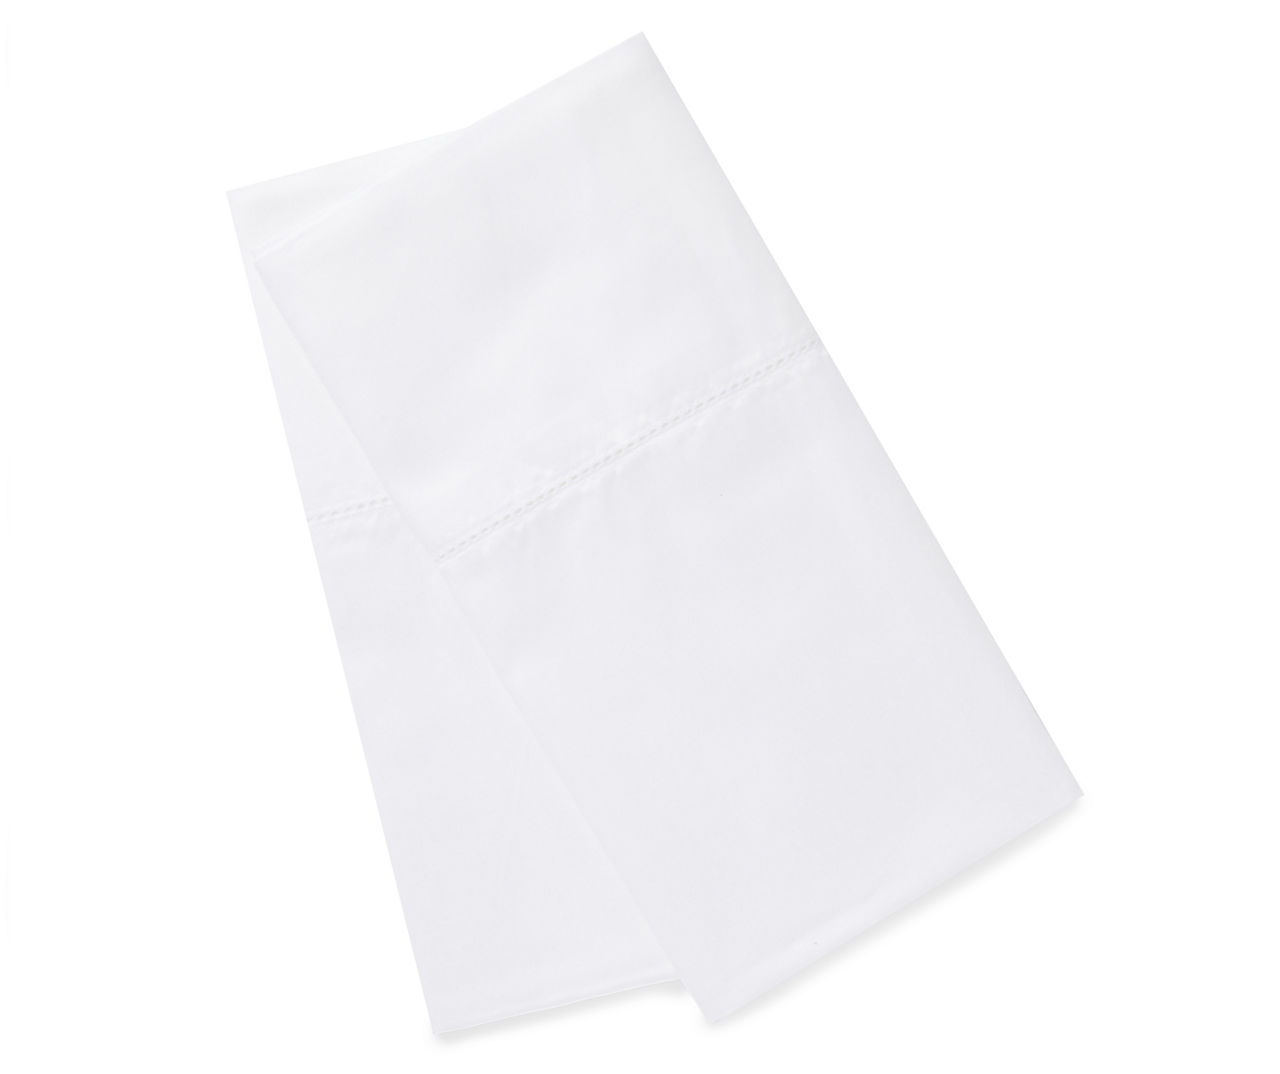 Brilliant White 400 Thread Count Standard Pillowcases, 2-Pack